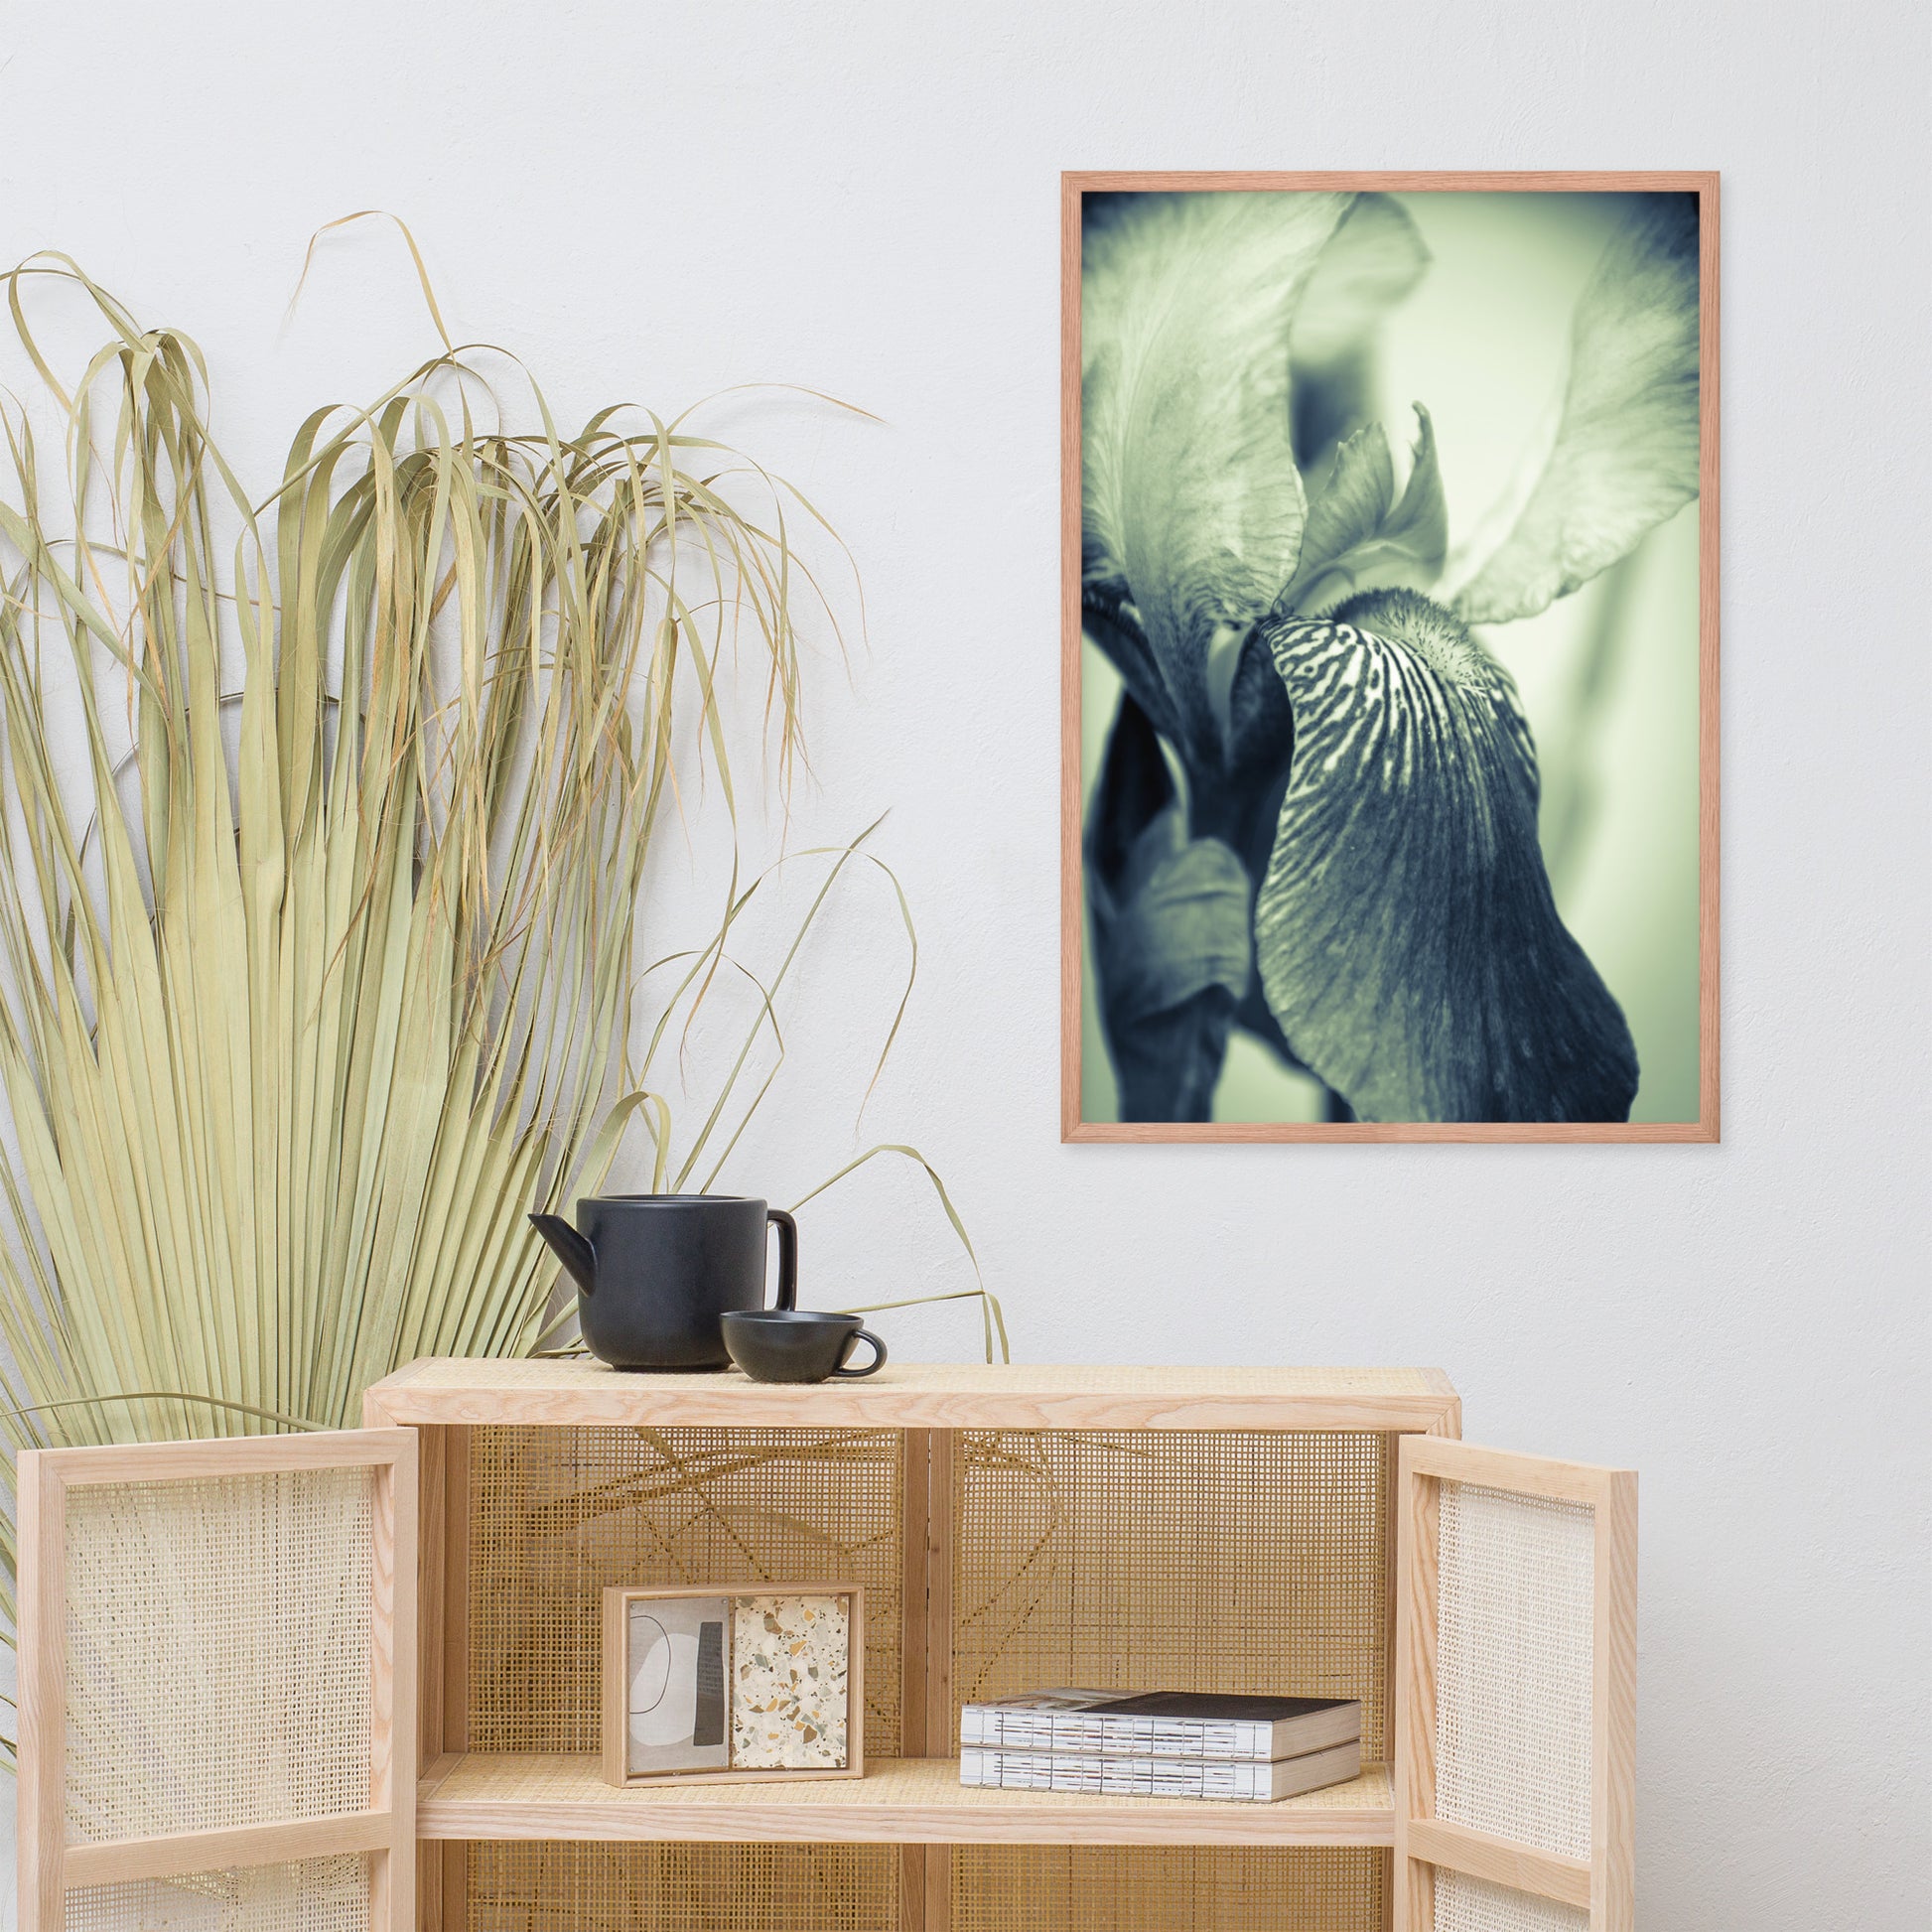 Dining Room Wall Art Decor Ideas: Abstract Japanese Iris Delight- Botanical / Floral / Flora / Flowers / Nature Photograph Framed Wall Art Print - Artwork - Wall Decor - Home Decor